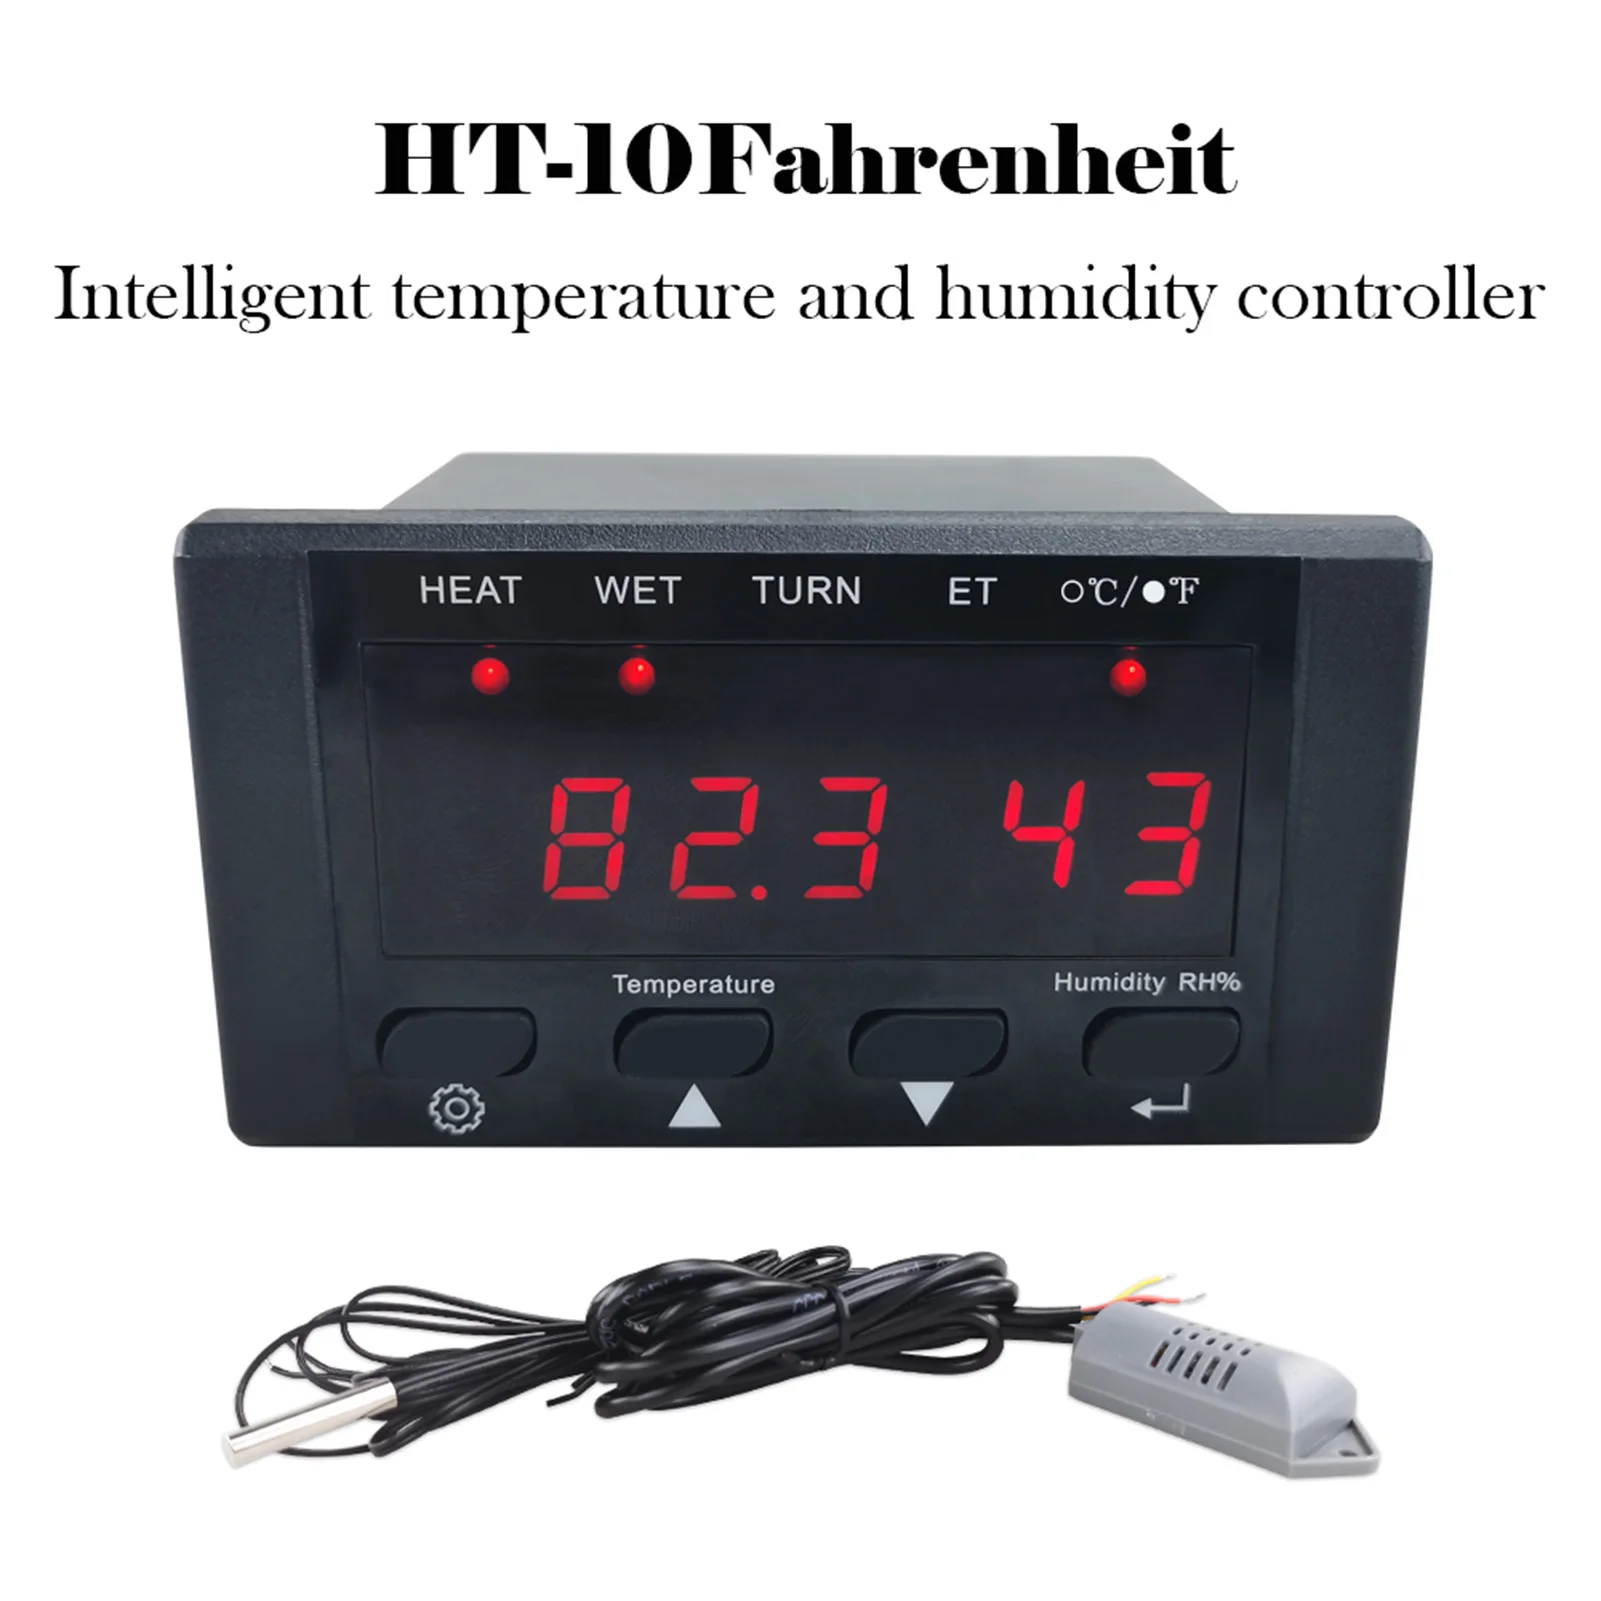 

AC110-220V Digital Temperature Humidity Controller Thermostat Instrument Regulator Celsius And Fahrenheit Display Refrigerator